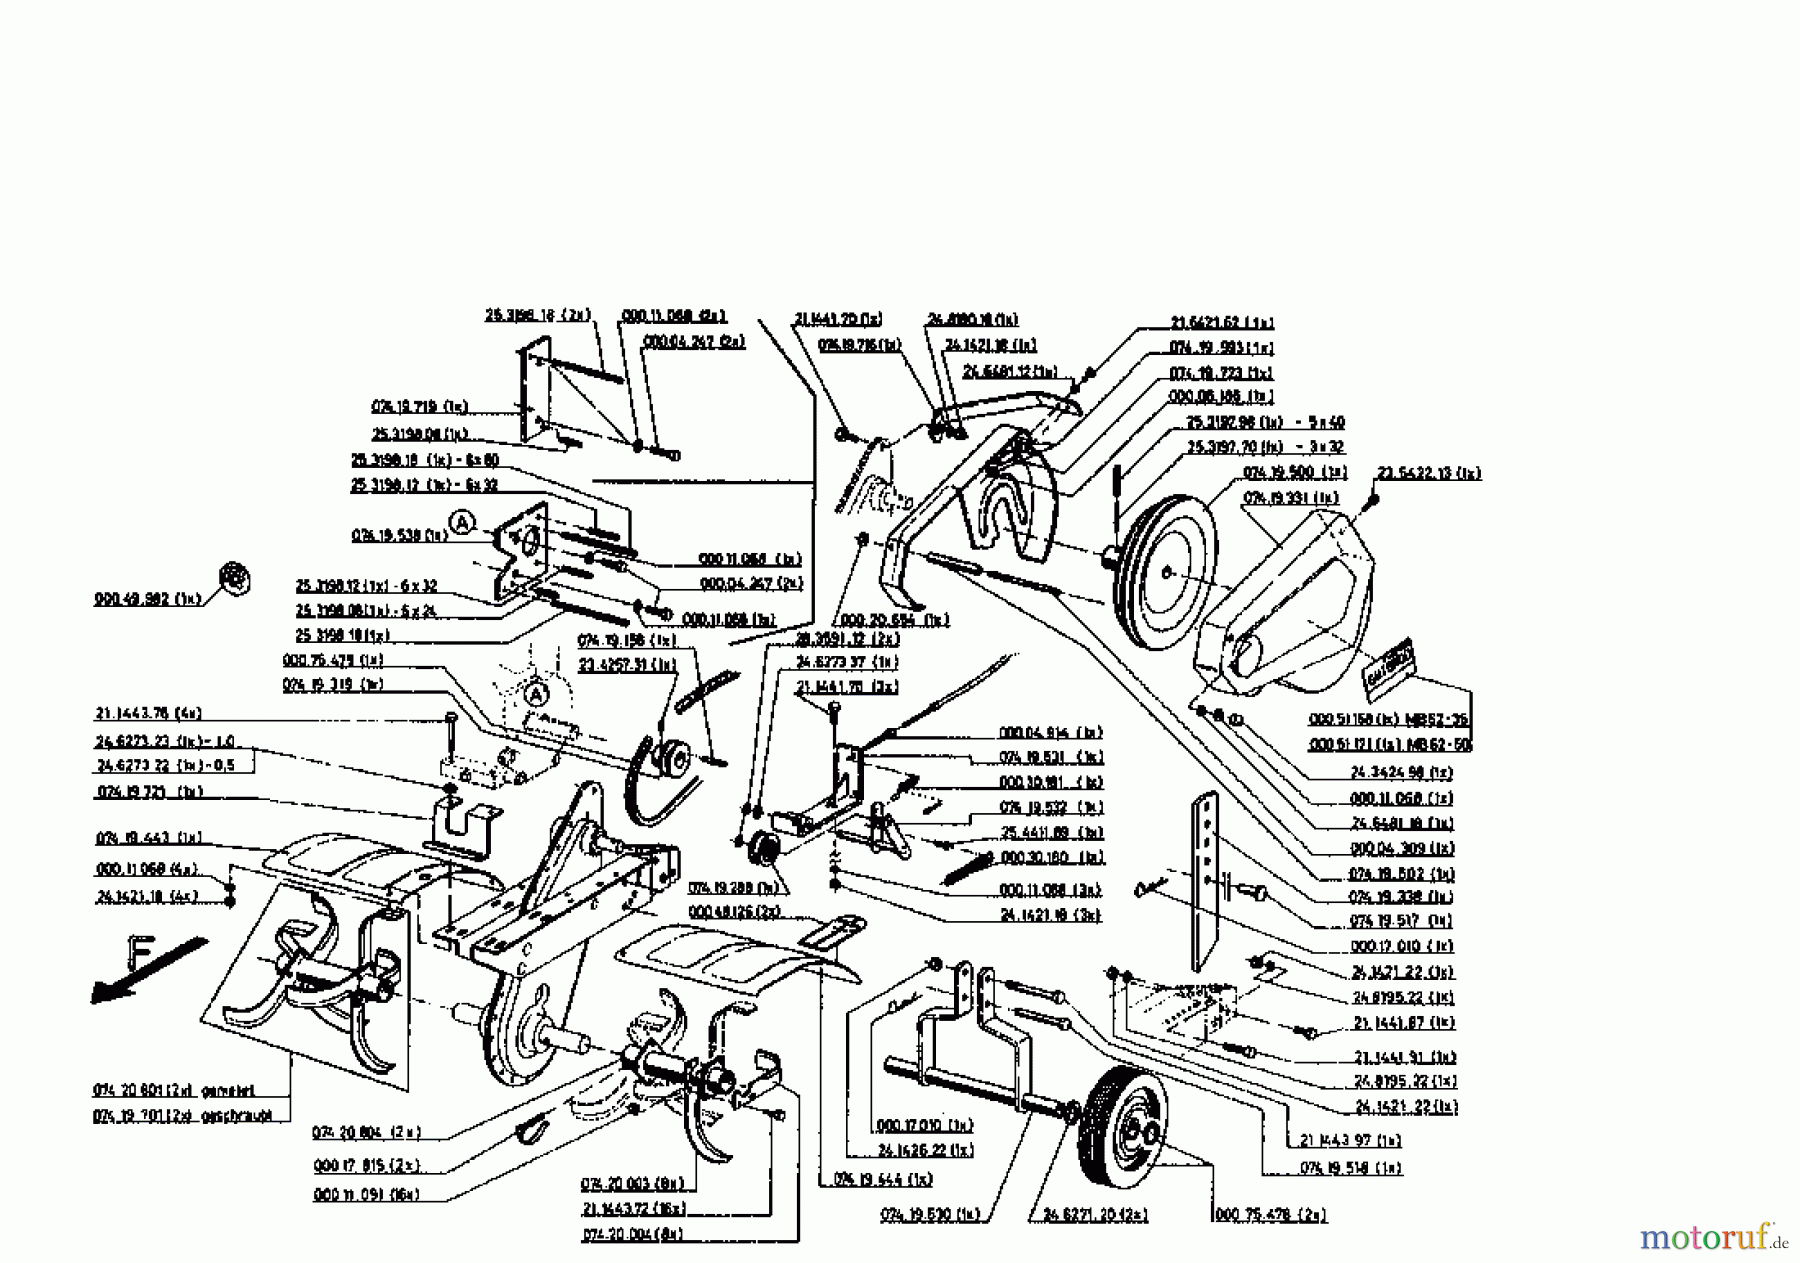  Gutbrod Tillers MB 62-50 07518.04  (1995) Basic machine